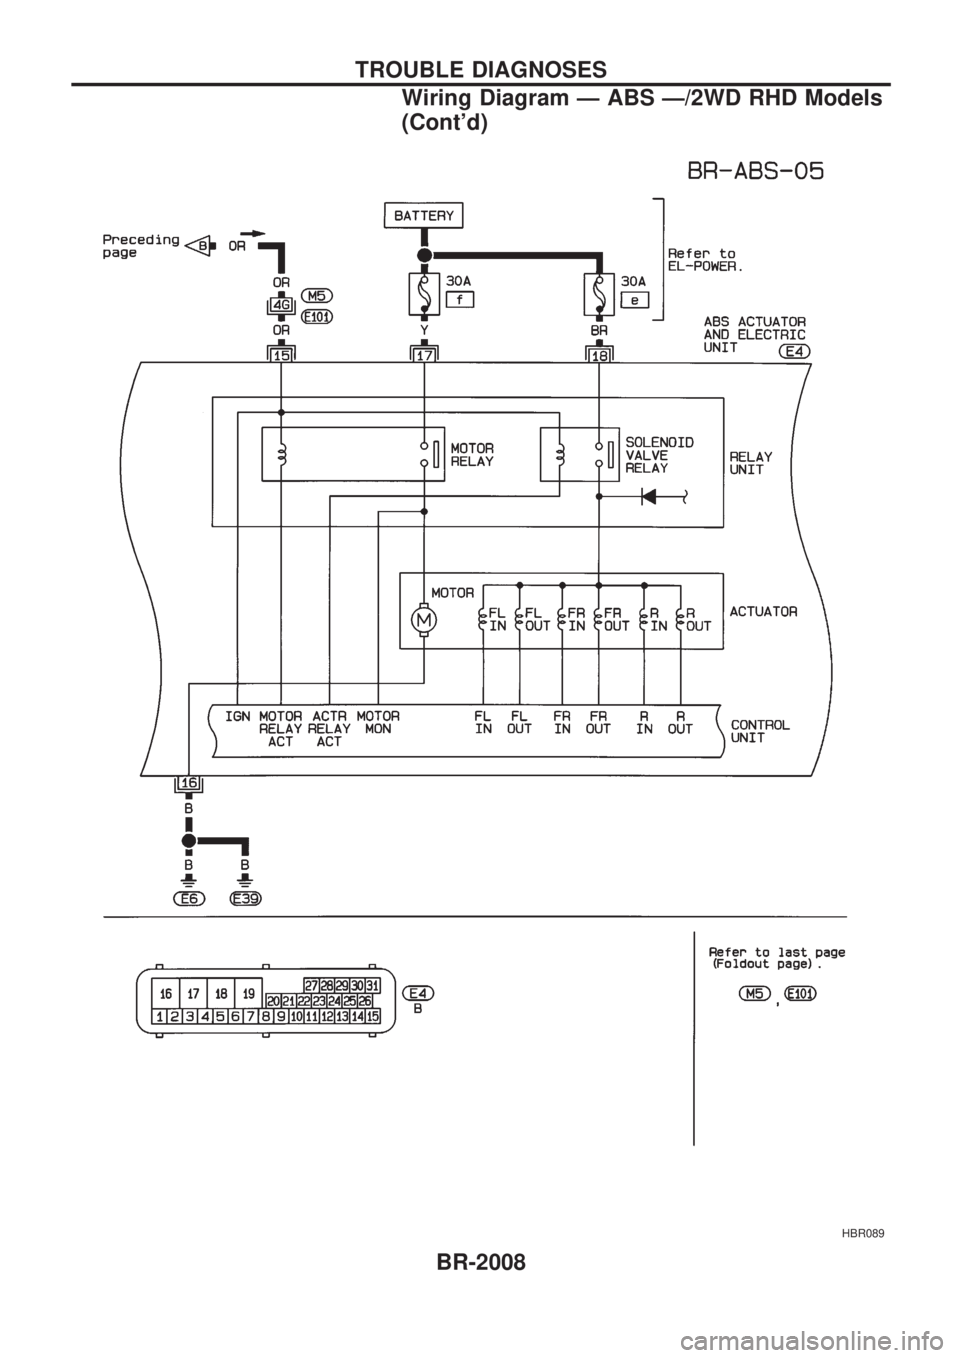 NISSAN PICK-UP 1999  Repair Manual HBR089
TROUBLE DIAGNOSES
Wiring Diagram Ð ABS Ð/2WD RHD Models
(Contd)
BR-2008 